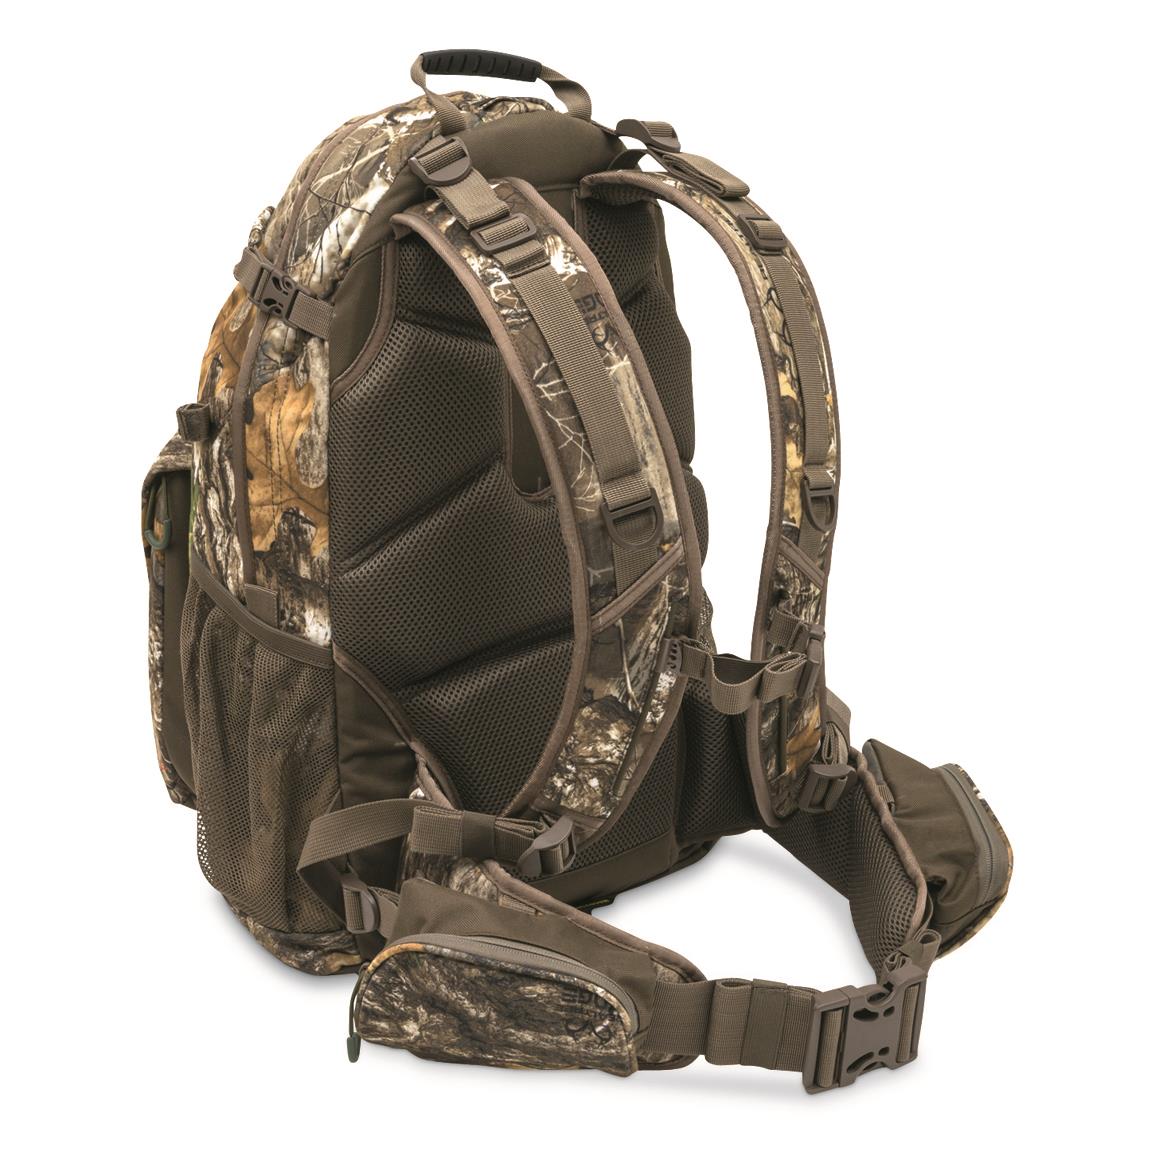 ALPS OutdoorZ Matrix Backpack - 670141, Hunting Backpacks at Sportsman ...